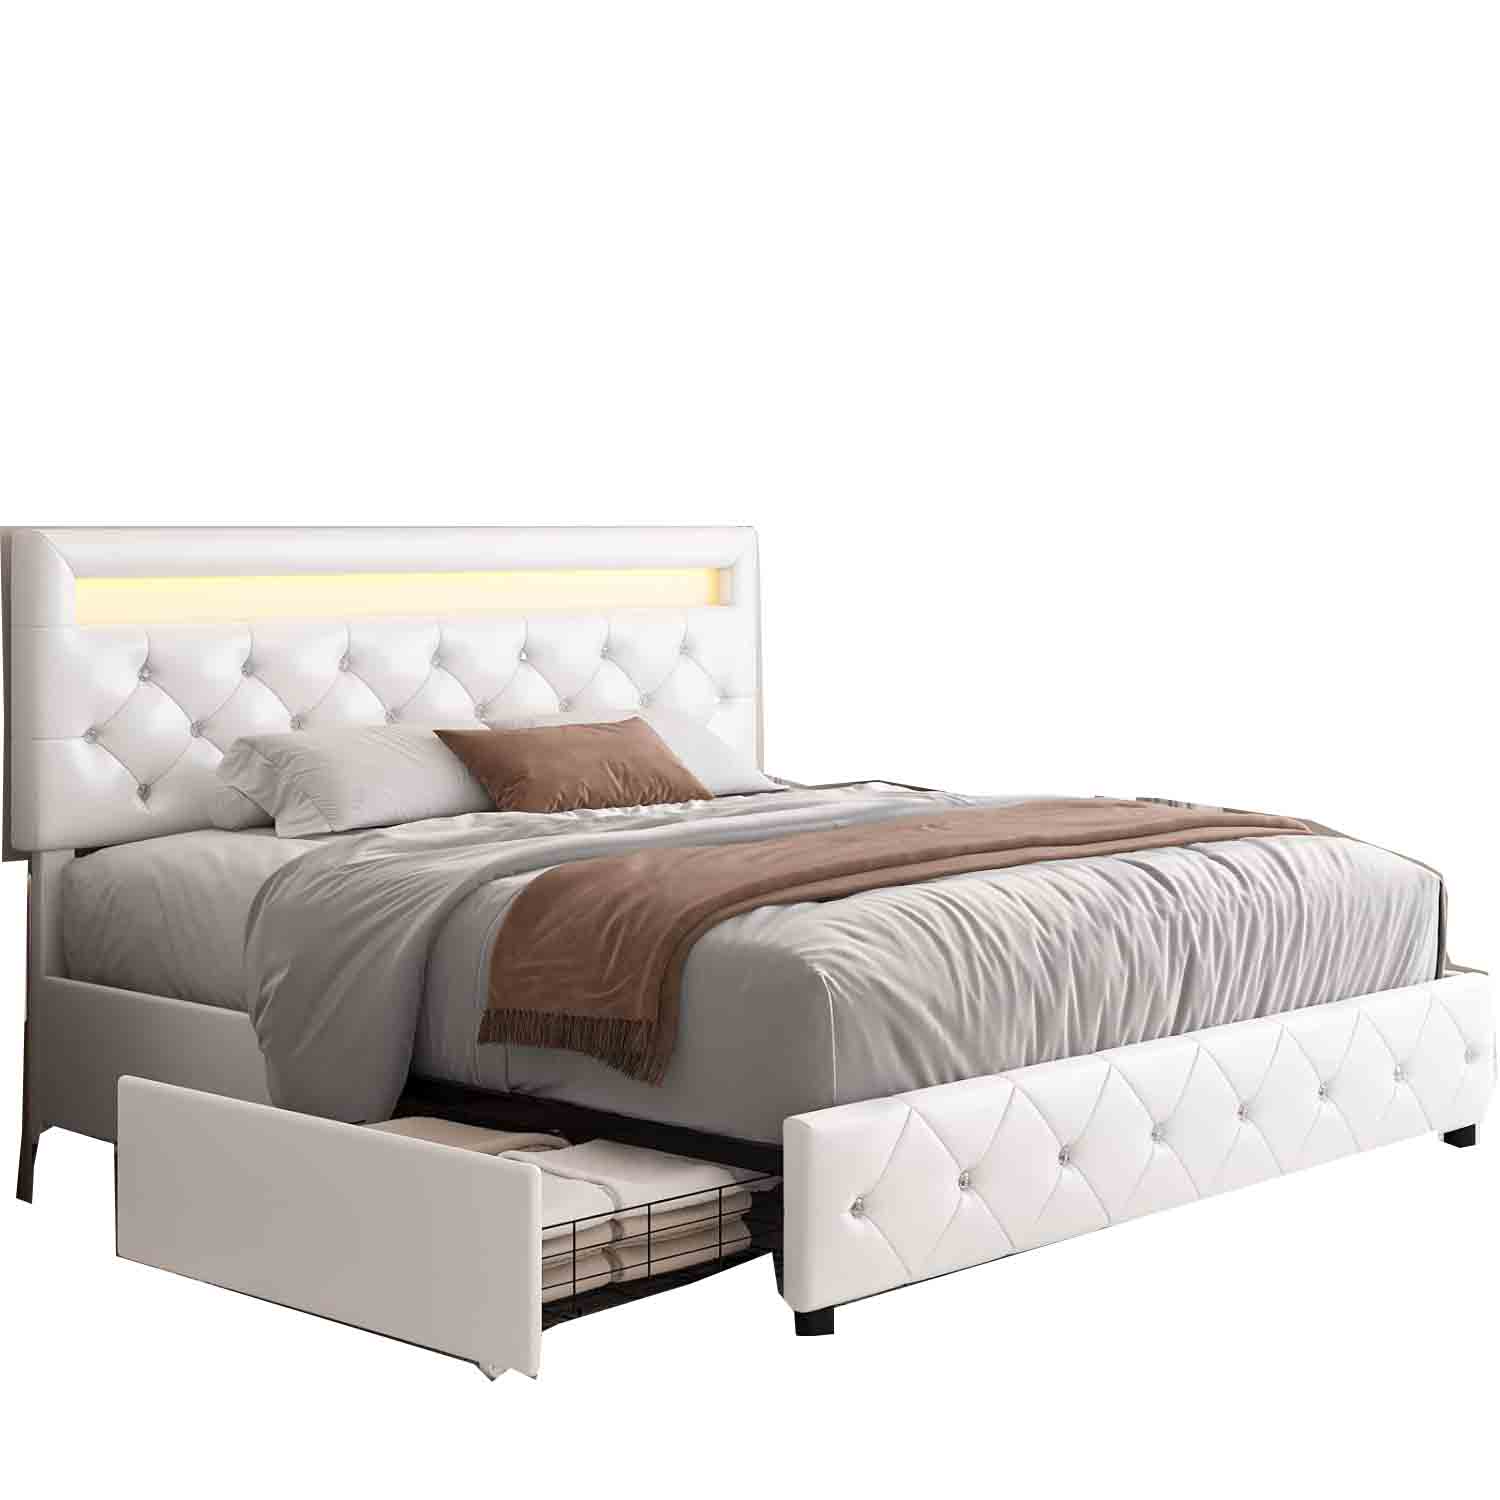 Upholstered Platform Bed With LED Lights and Four Storage Drawer